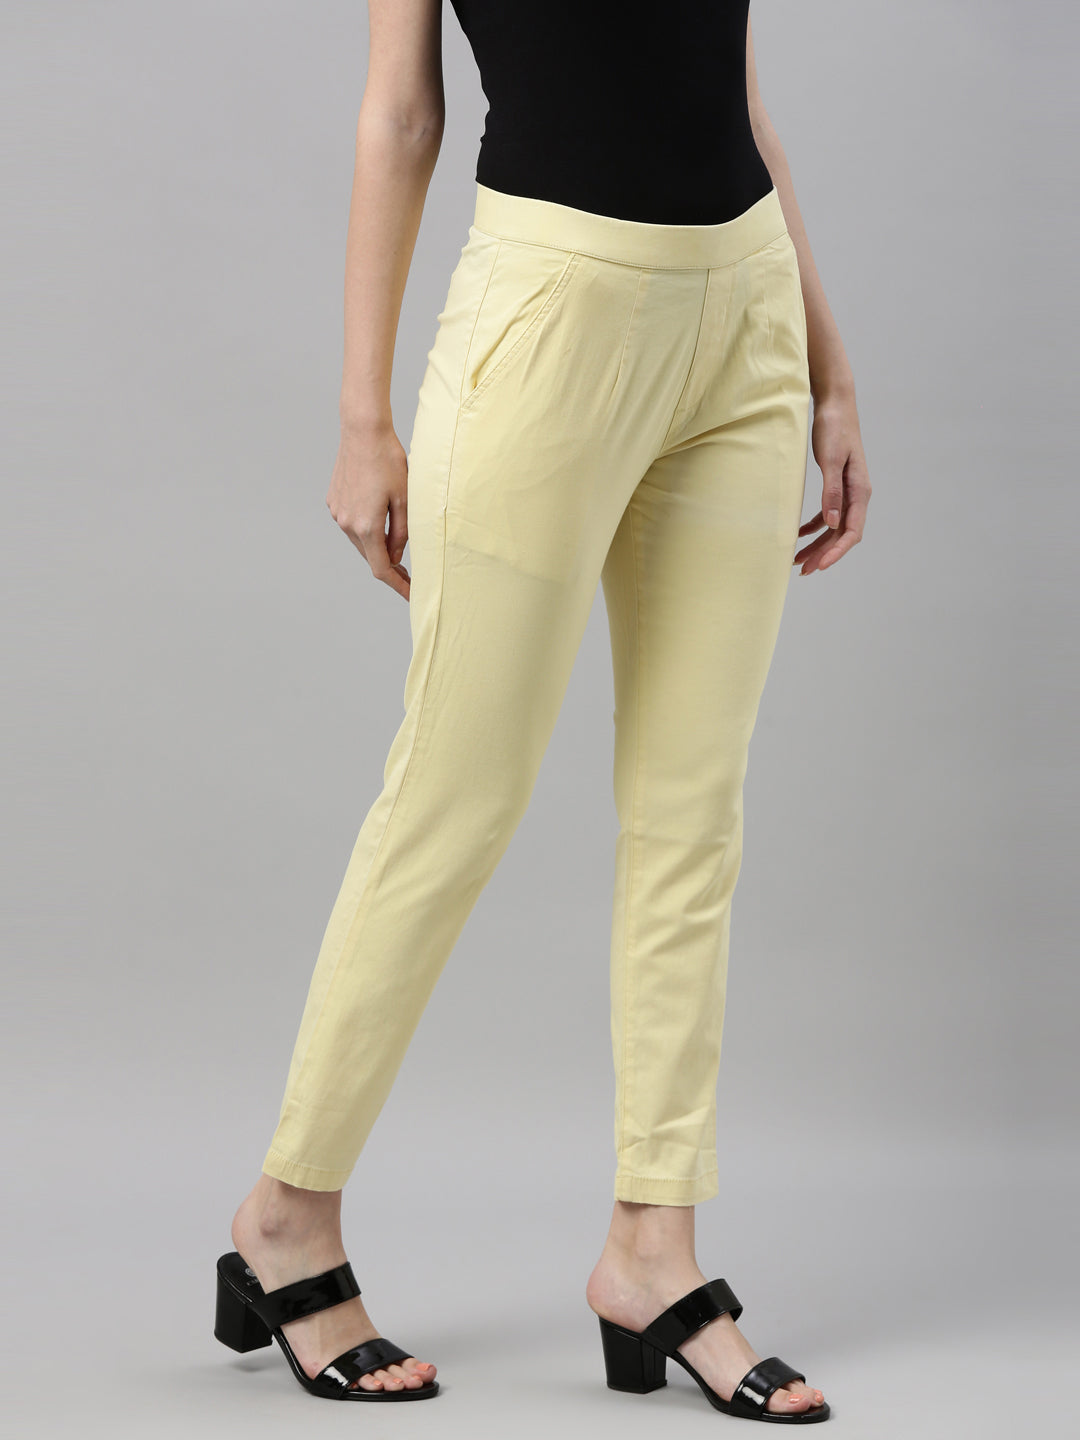 WOMEN / Scrub Trousers / Women's Maevn Matrix Impulse Stylish scrub trousers  sunshine yellow - Uniformshop